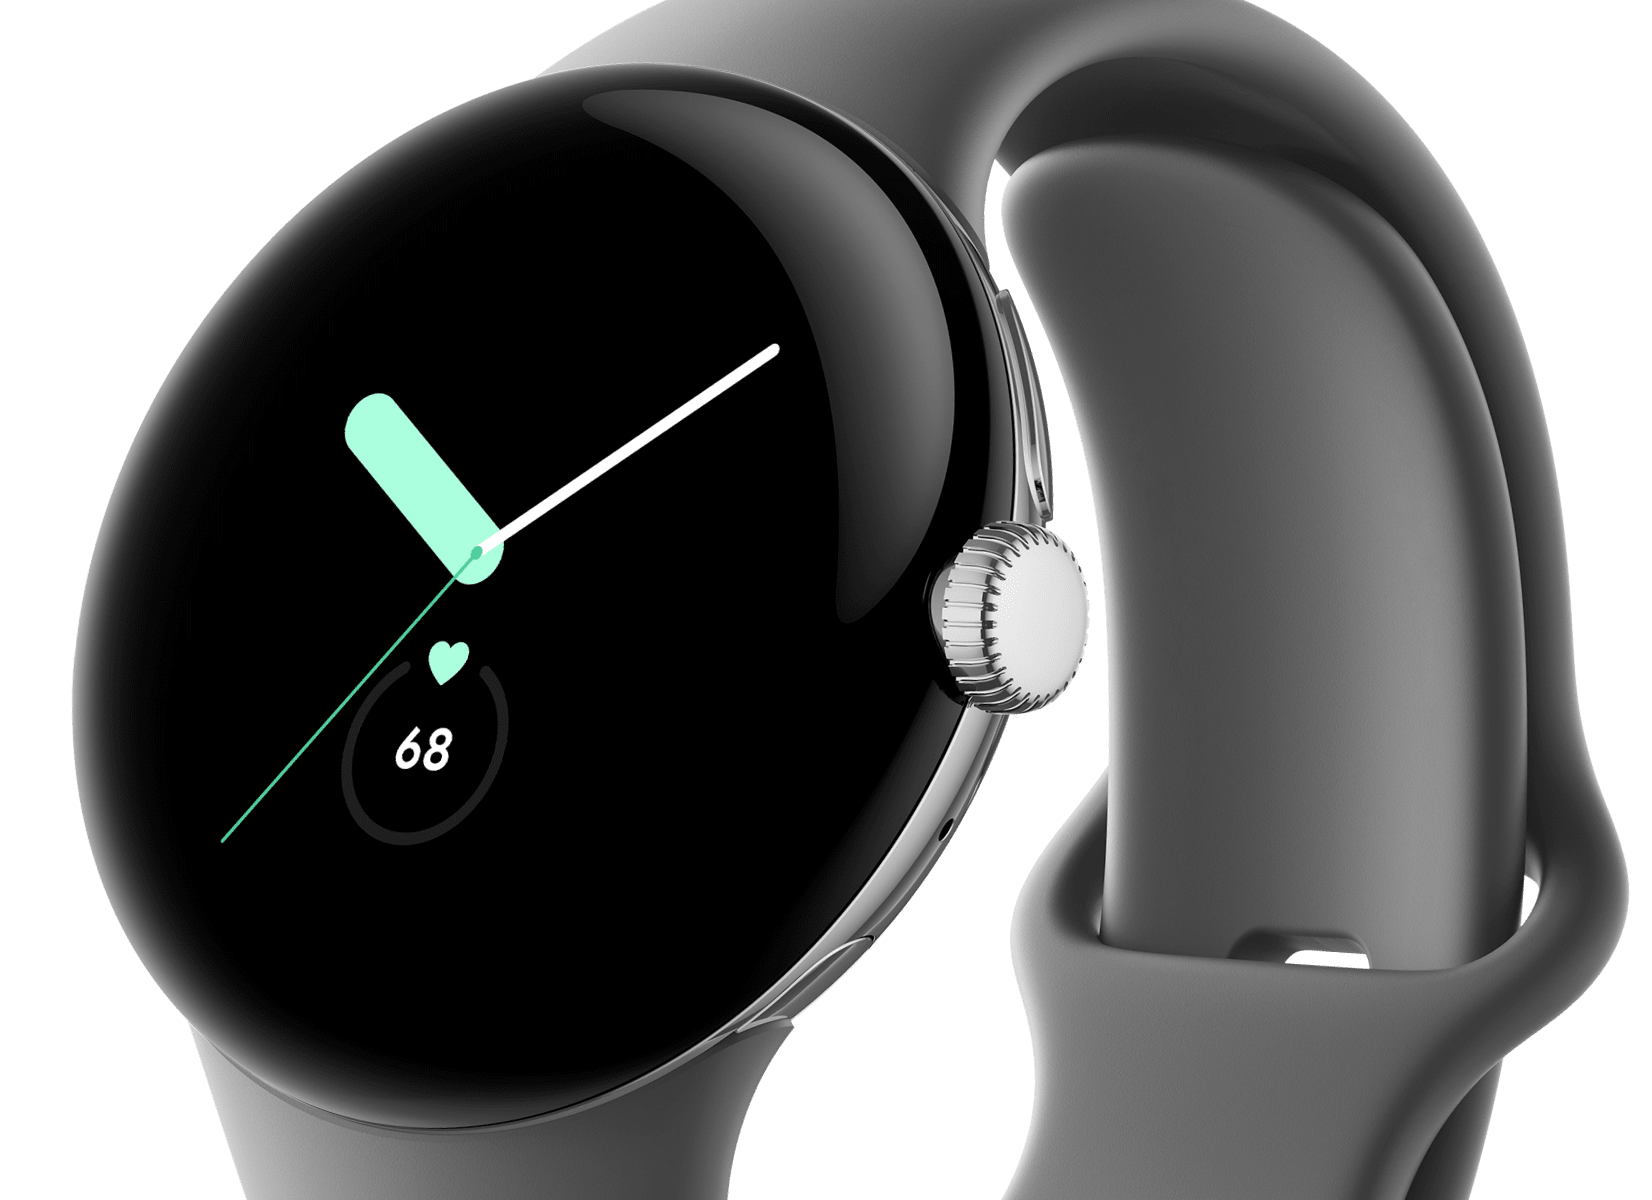 Kan ikke repareres: Google reparerer ikke Pixel Watch